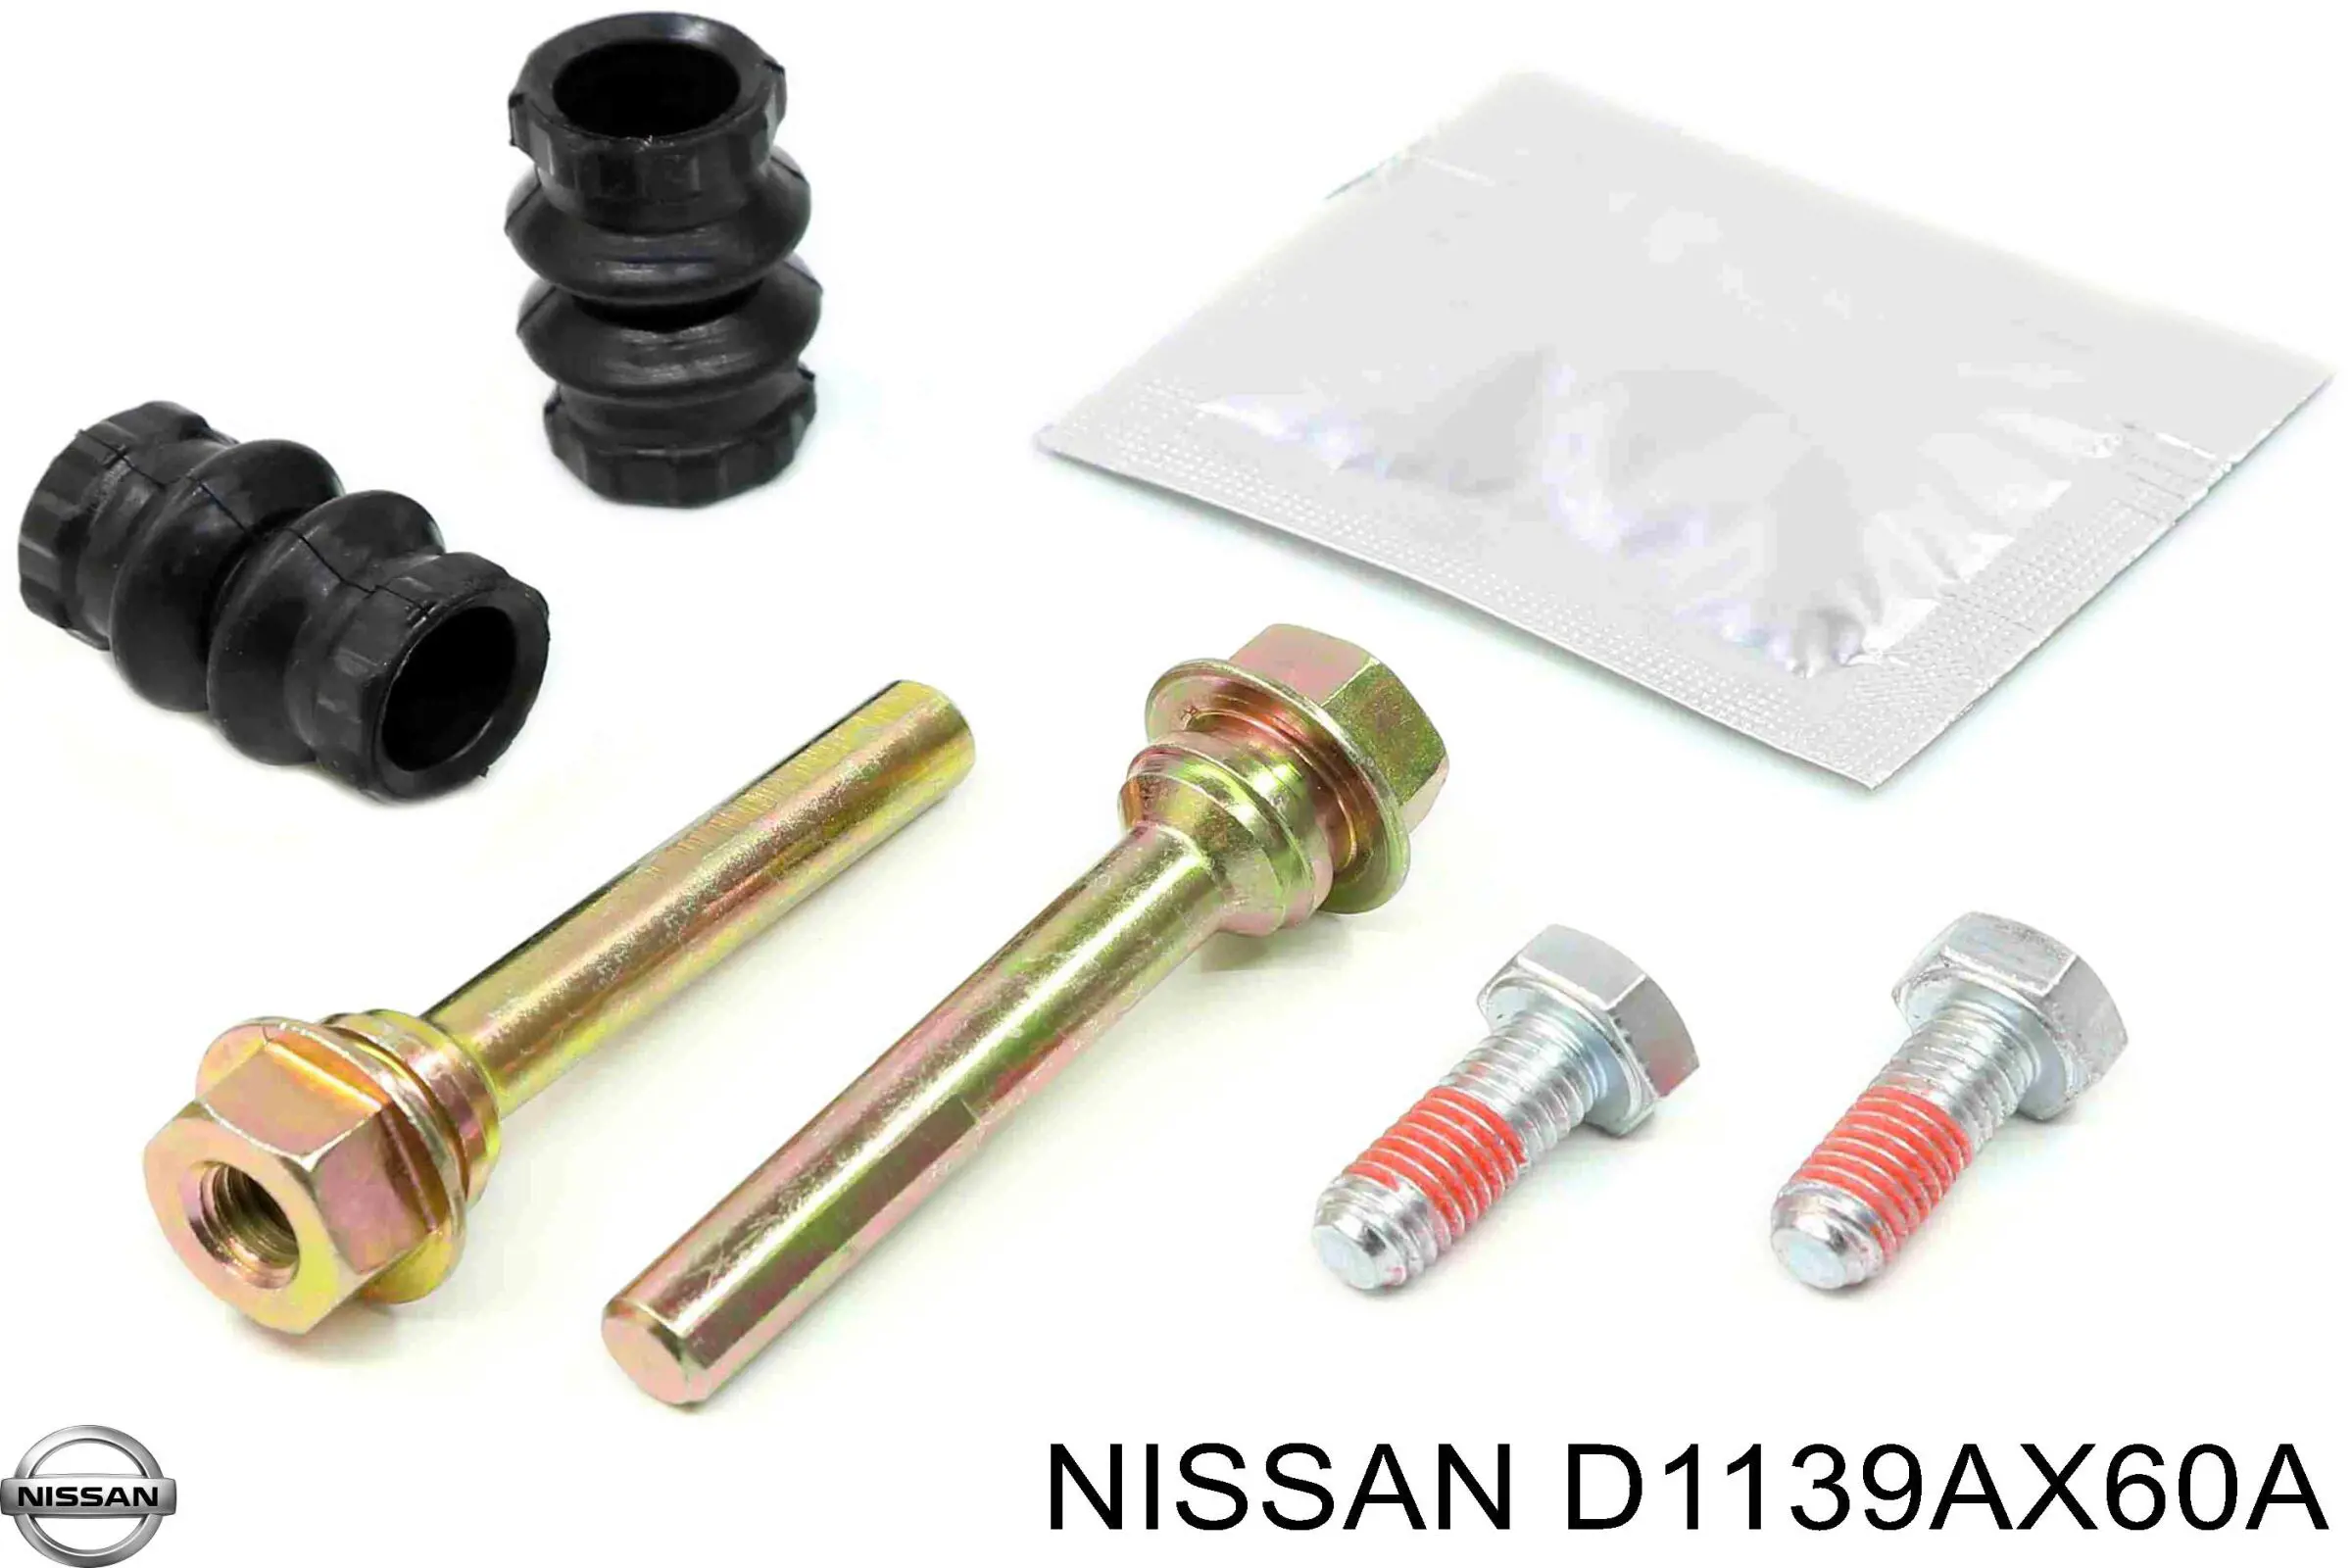 D1139AX60A Nissan juego de reparación, pinza de freno delantero